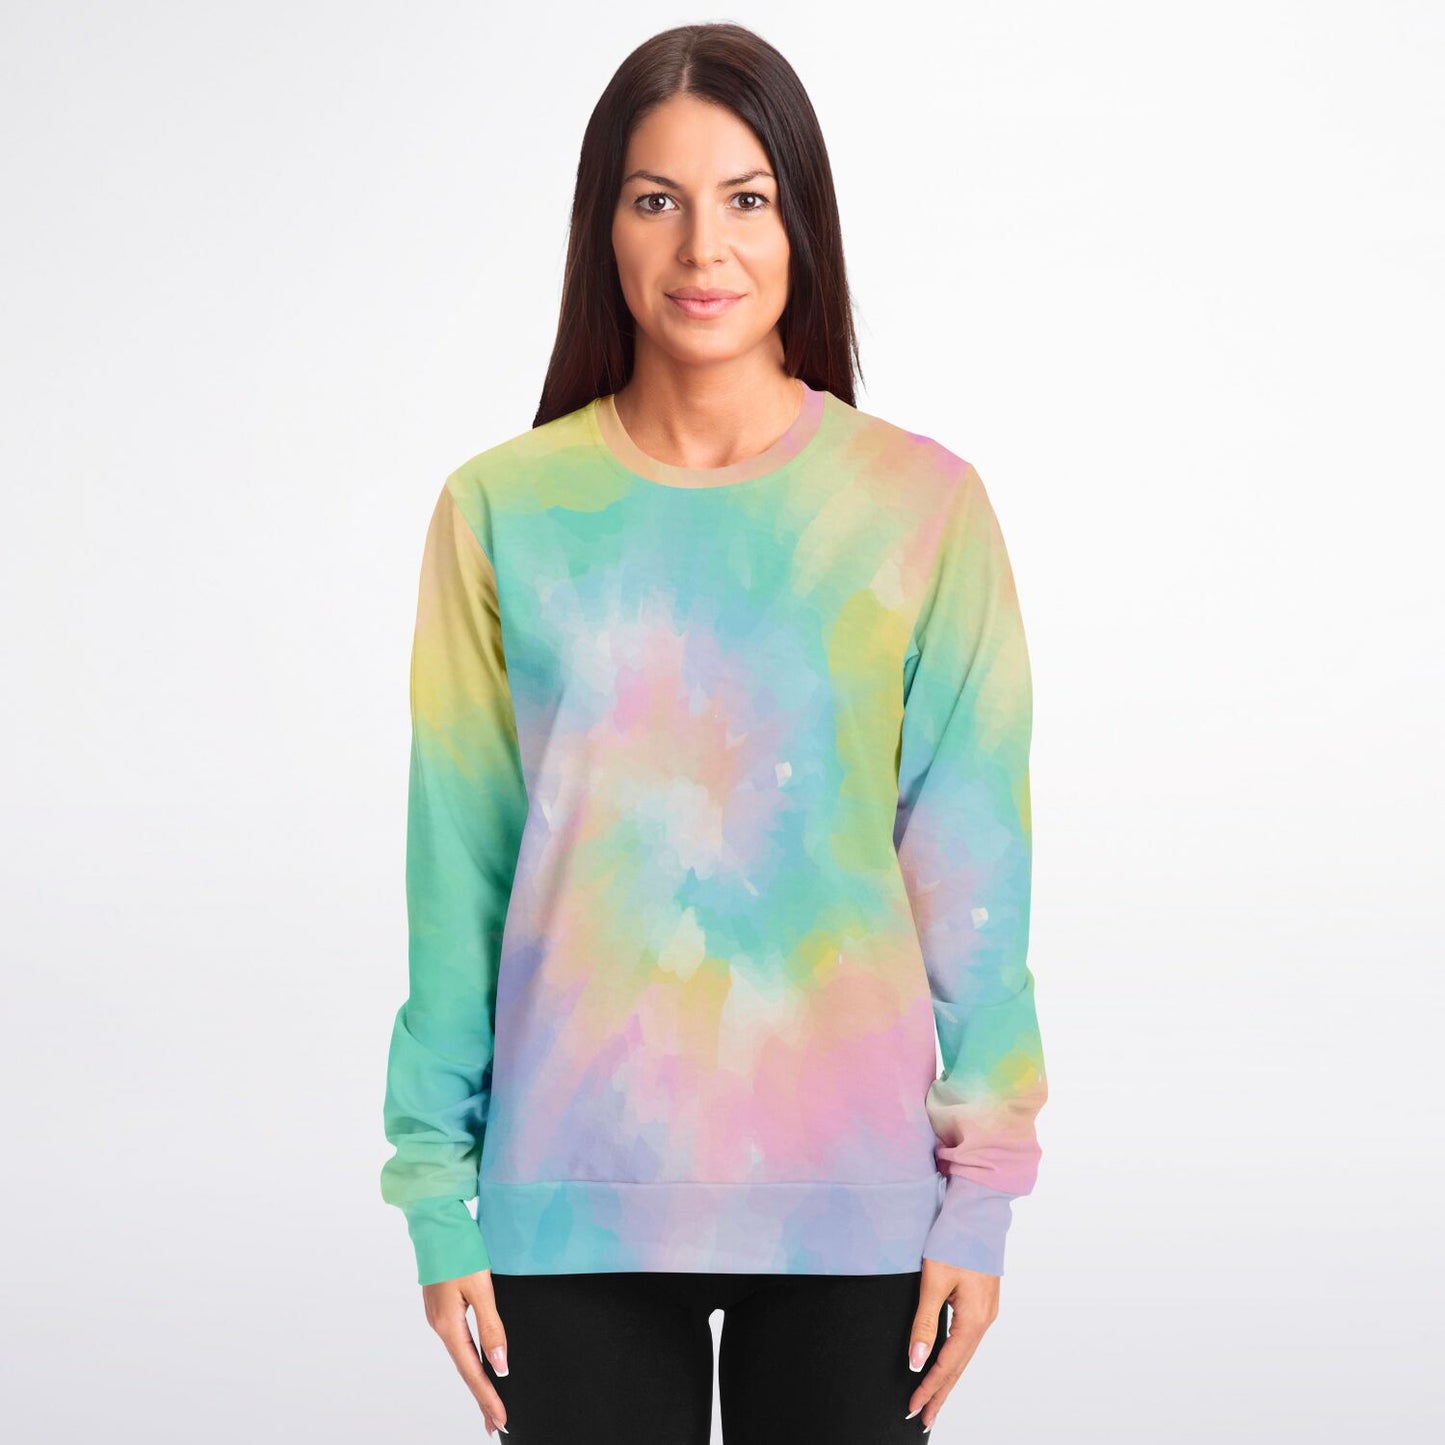 Tie Dye Sweatshirt, Pastel Rainbow Graphic Crewneck Fleece Cotton Sweater Jumper Pullover Men Women Adult Aesthetic Top Starcove Fashion